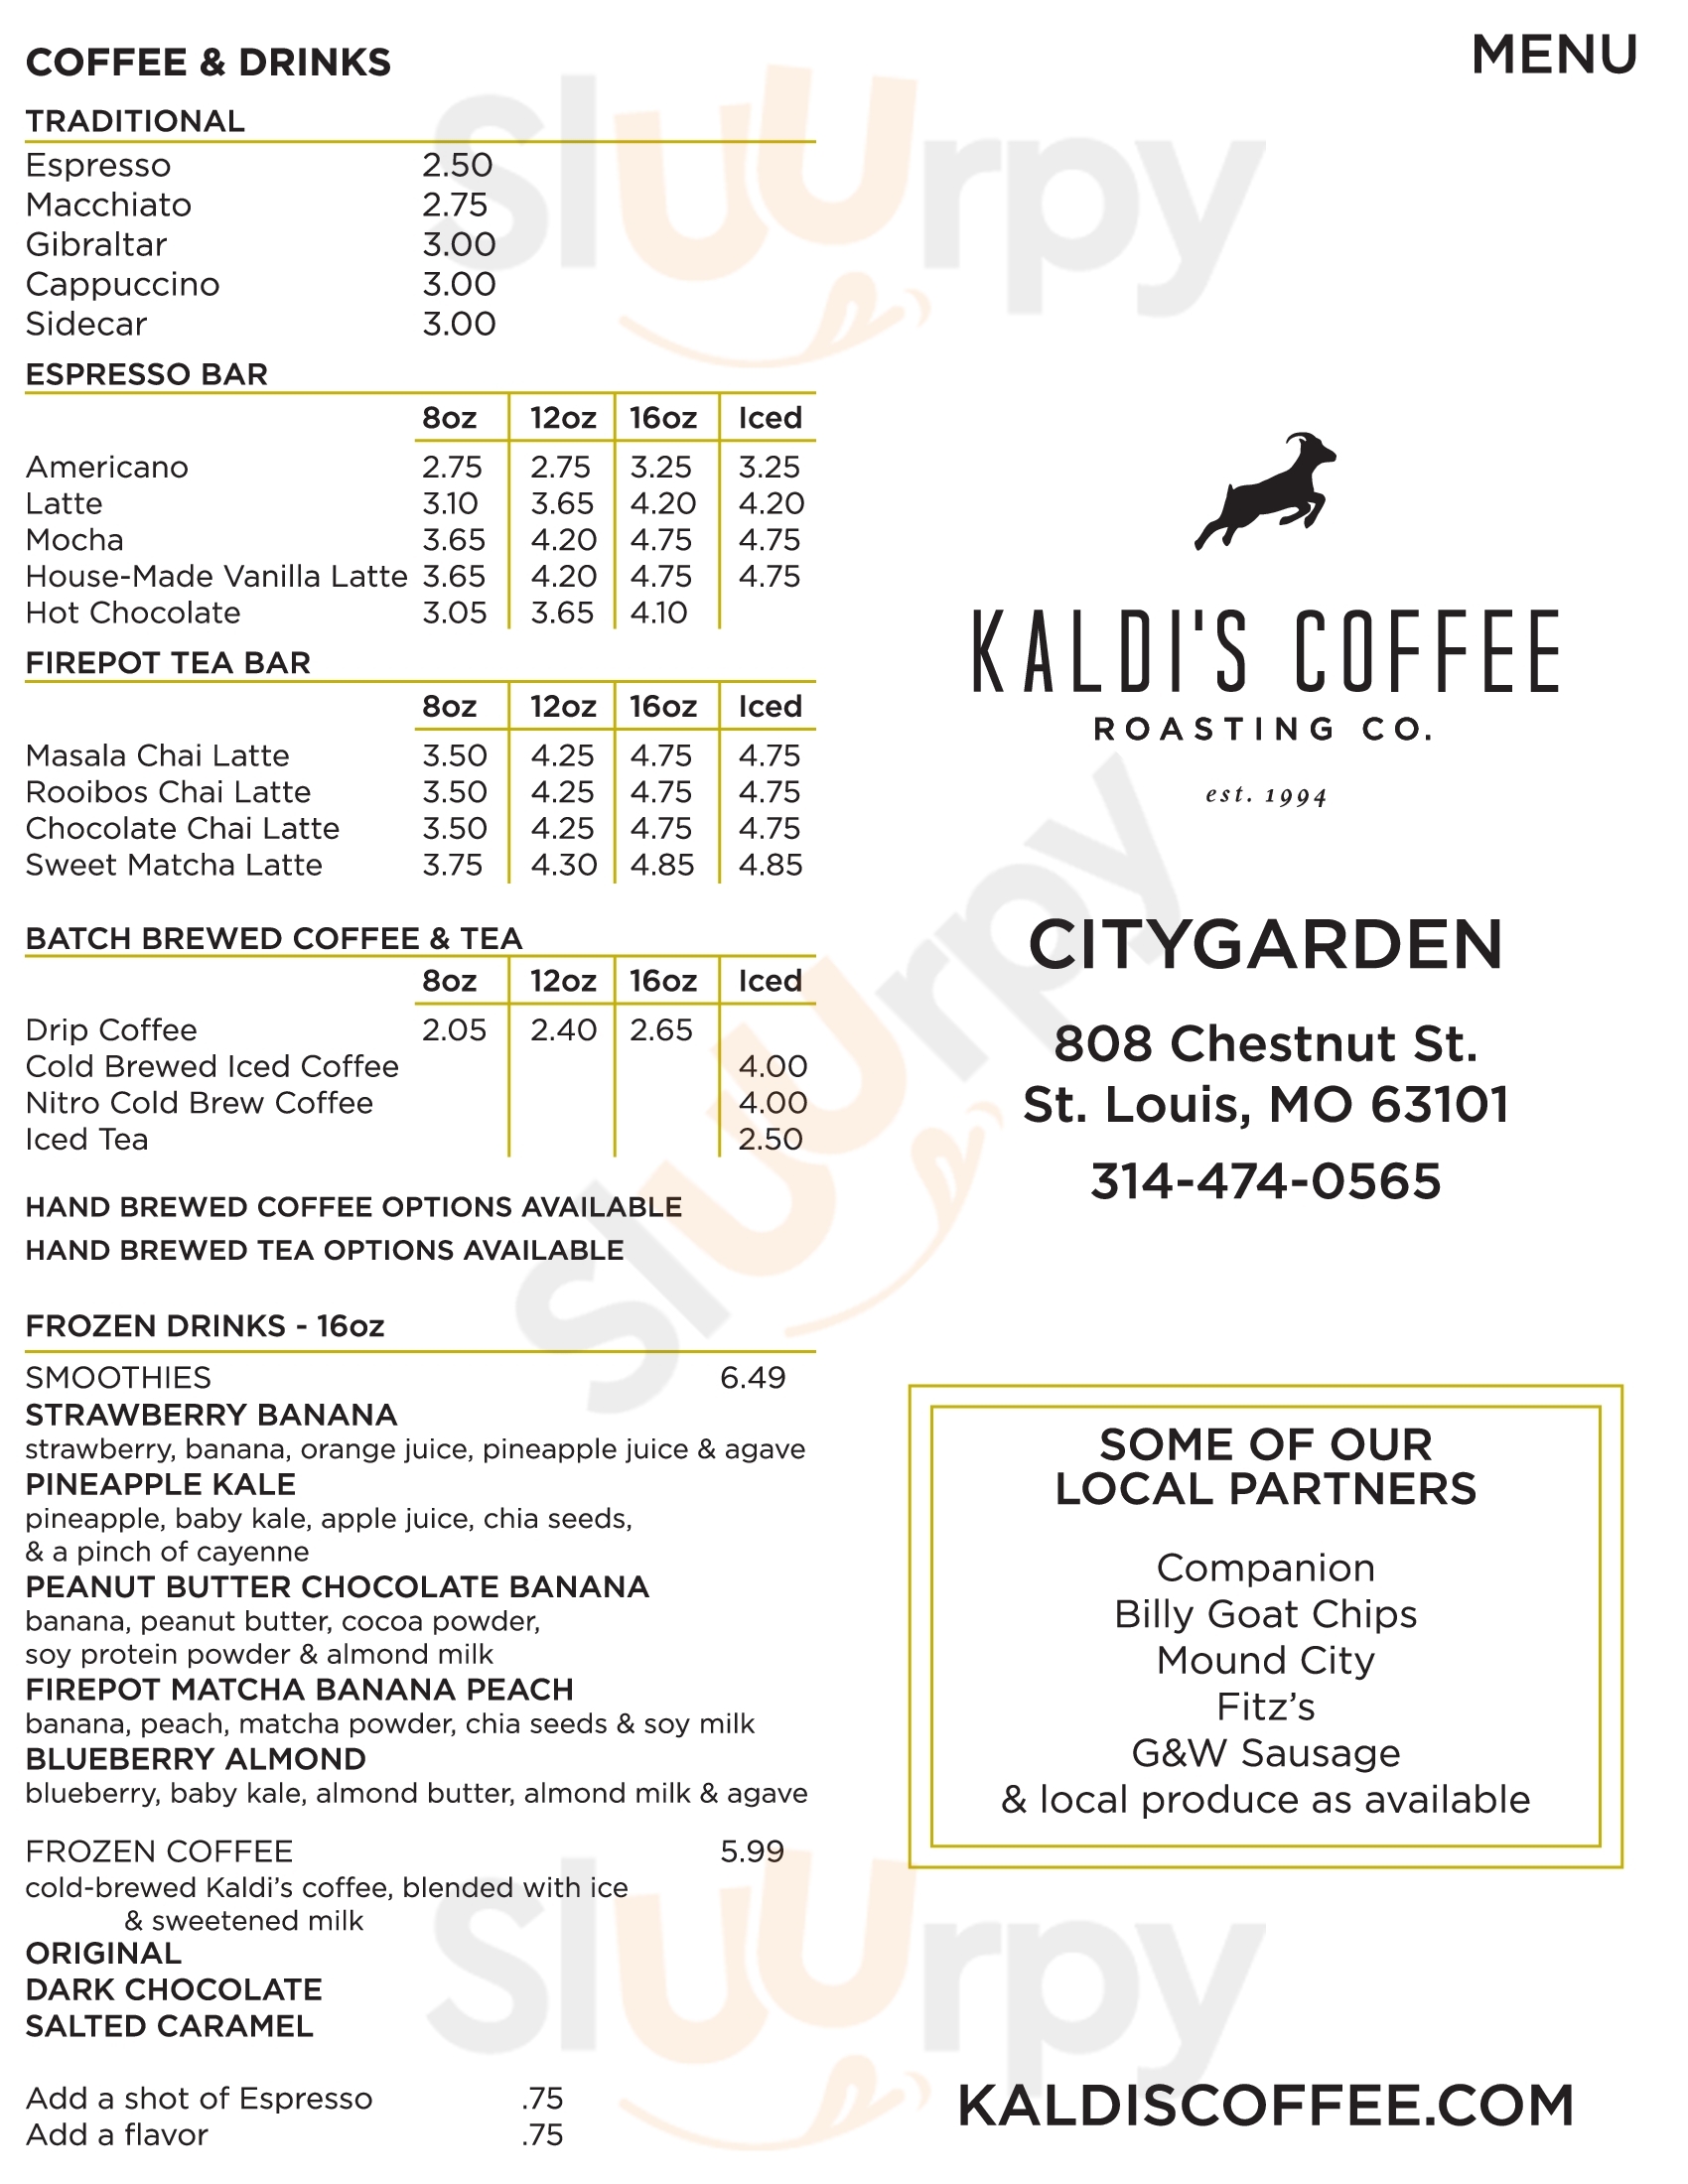 Kaldi's Coffee House At Citygarden Saint Louis Menu - 1